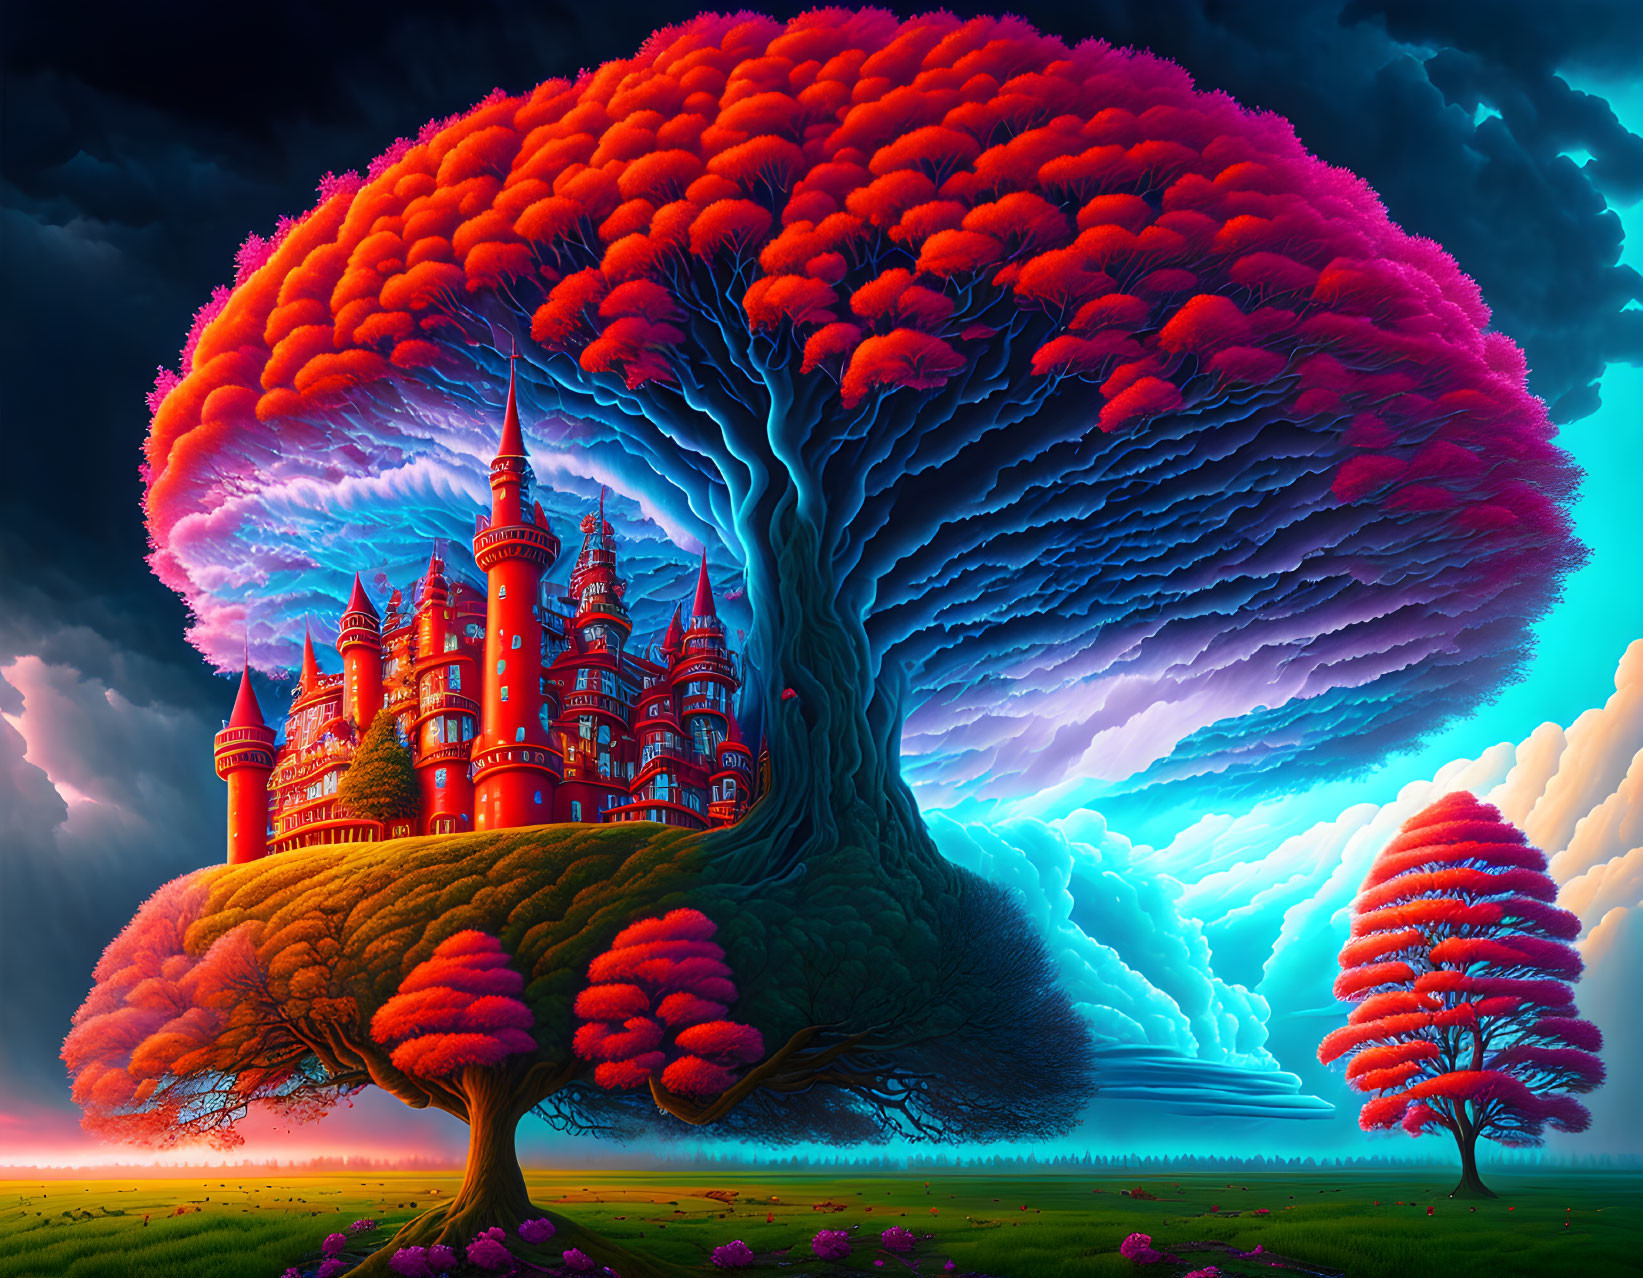 Colorful castle in massive tree under dramatic sky